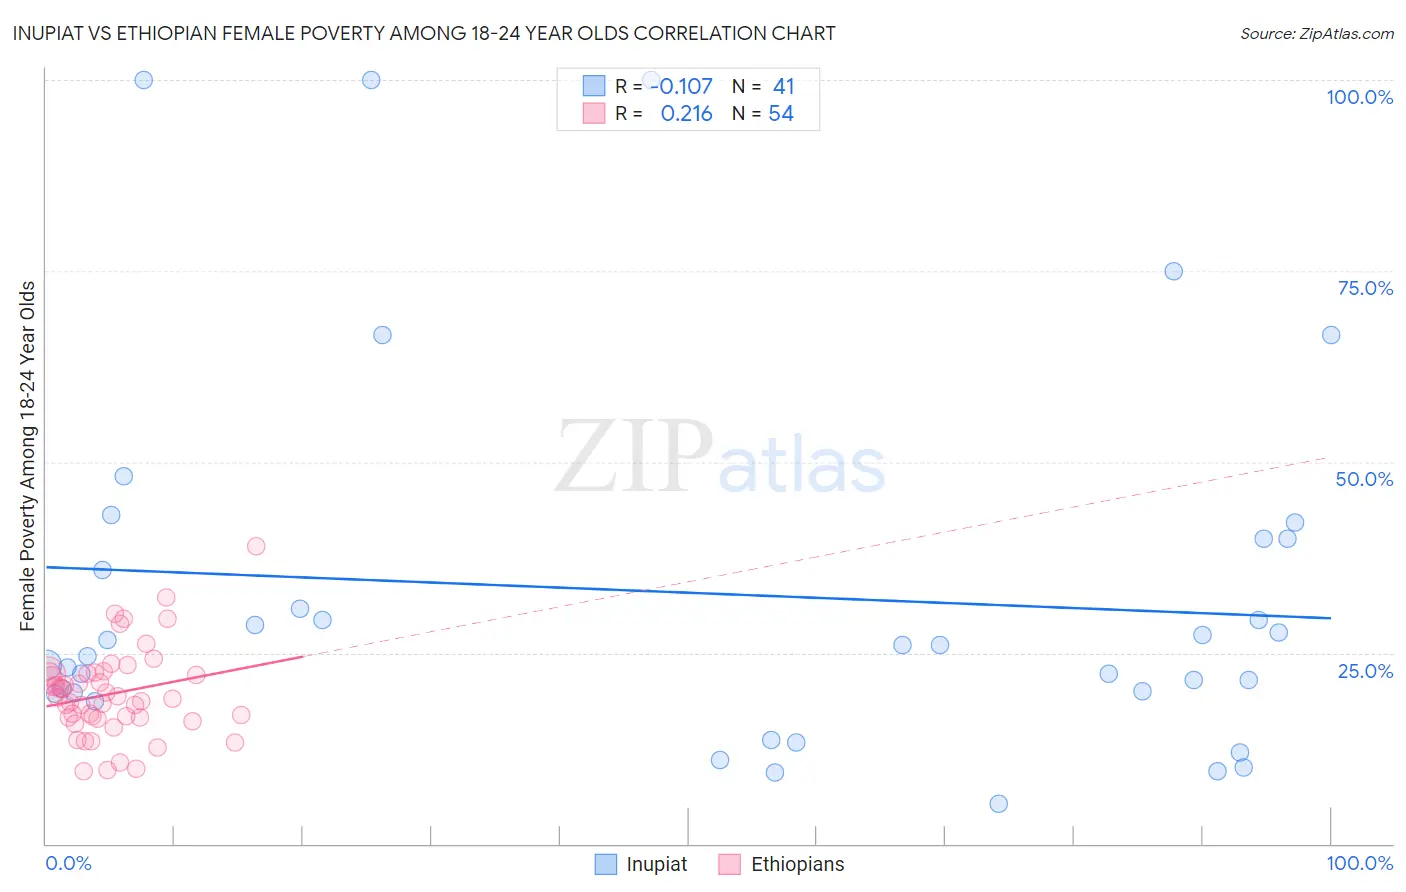 Inupiat vs Ethiopian Female Poverty Among 18-24 Year Olds